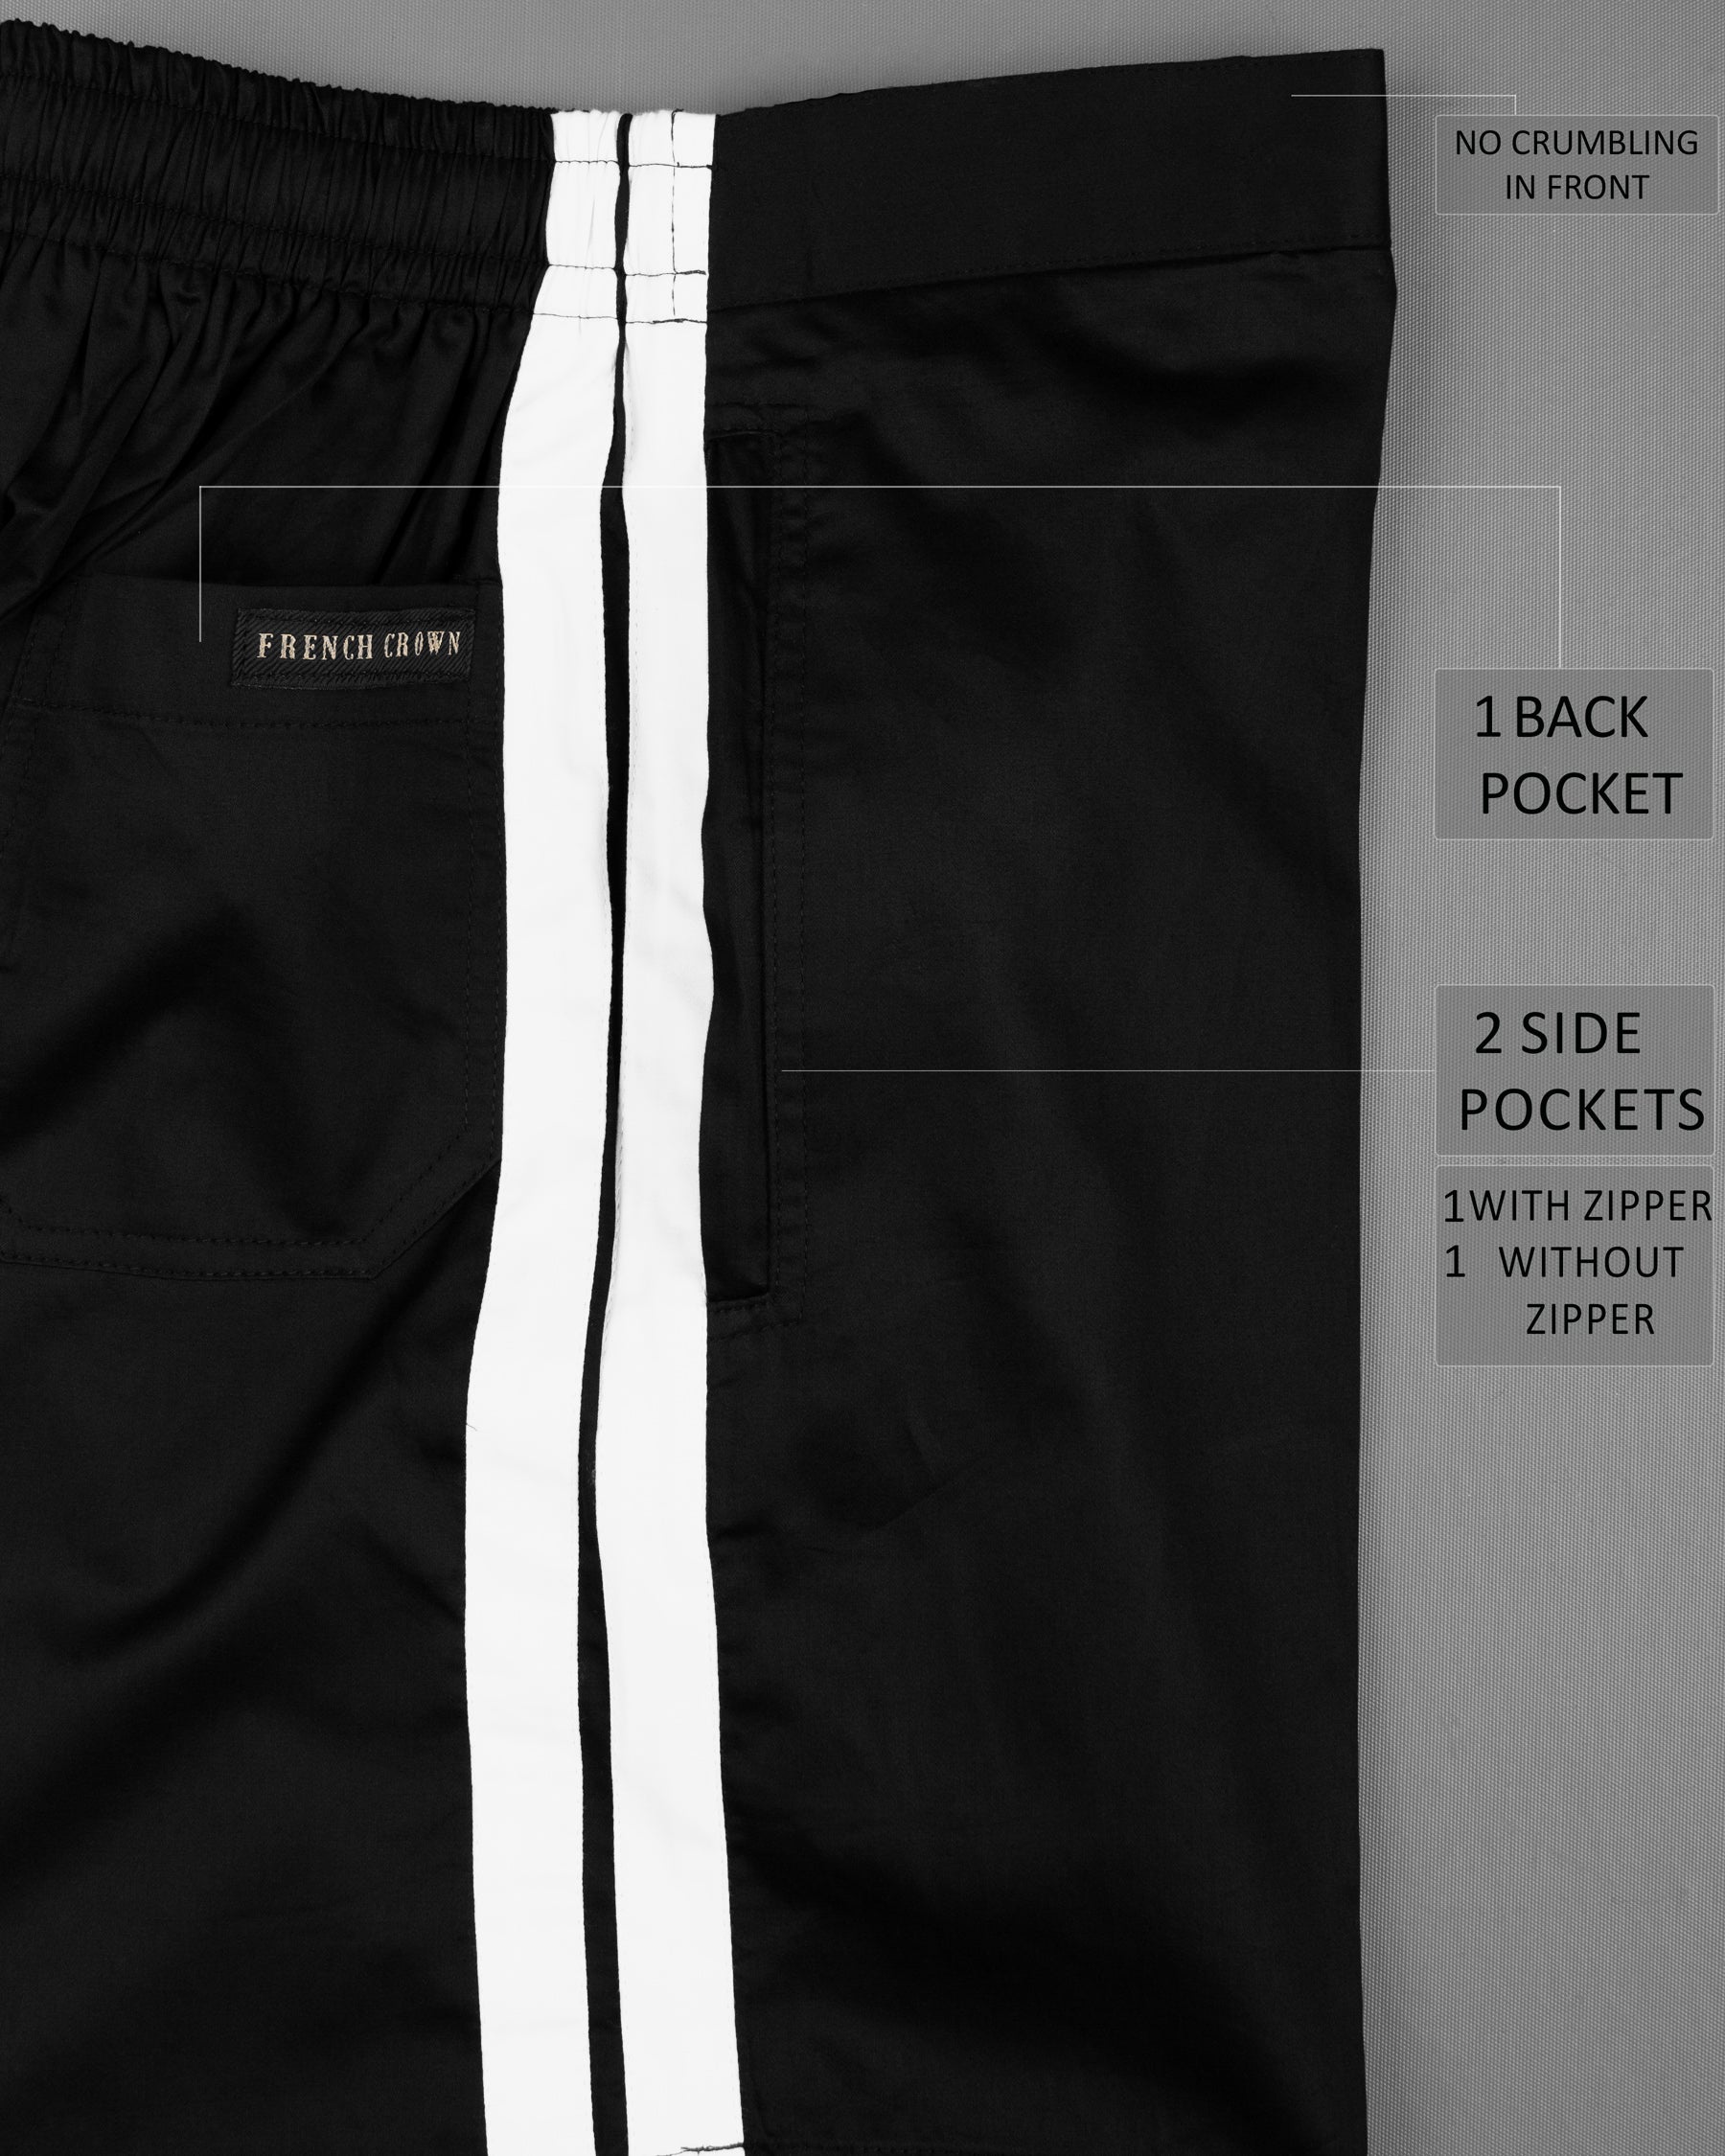 Jade Black and Bright White Contrast Striped Super Soft Premium Cotton Designer Shorts SR145-28, SR145-30, SR145-32, SR145-34, SR145-36, SR145-38, SR145-40, SR145-42, SR145-44